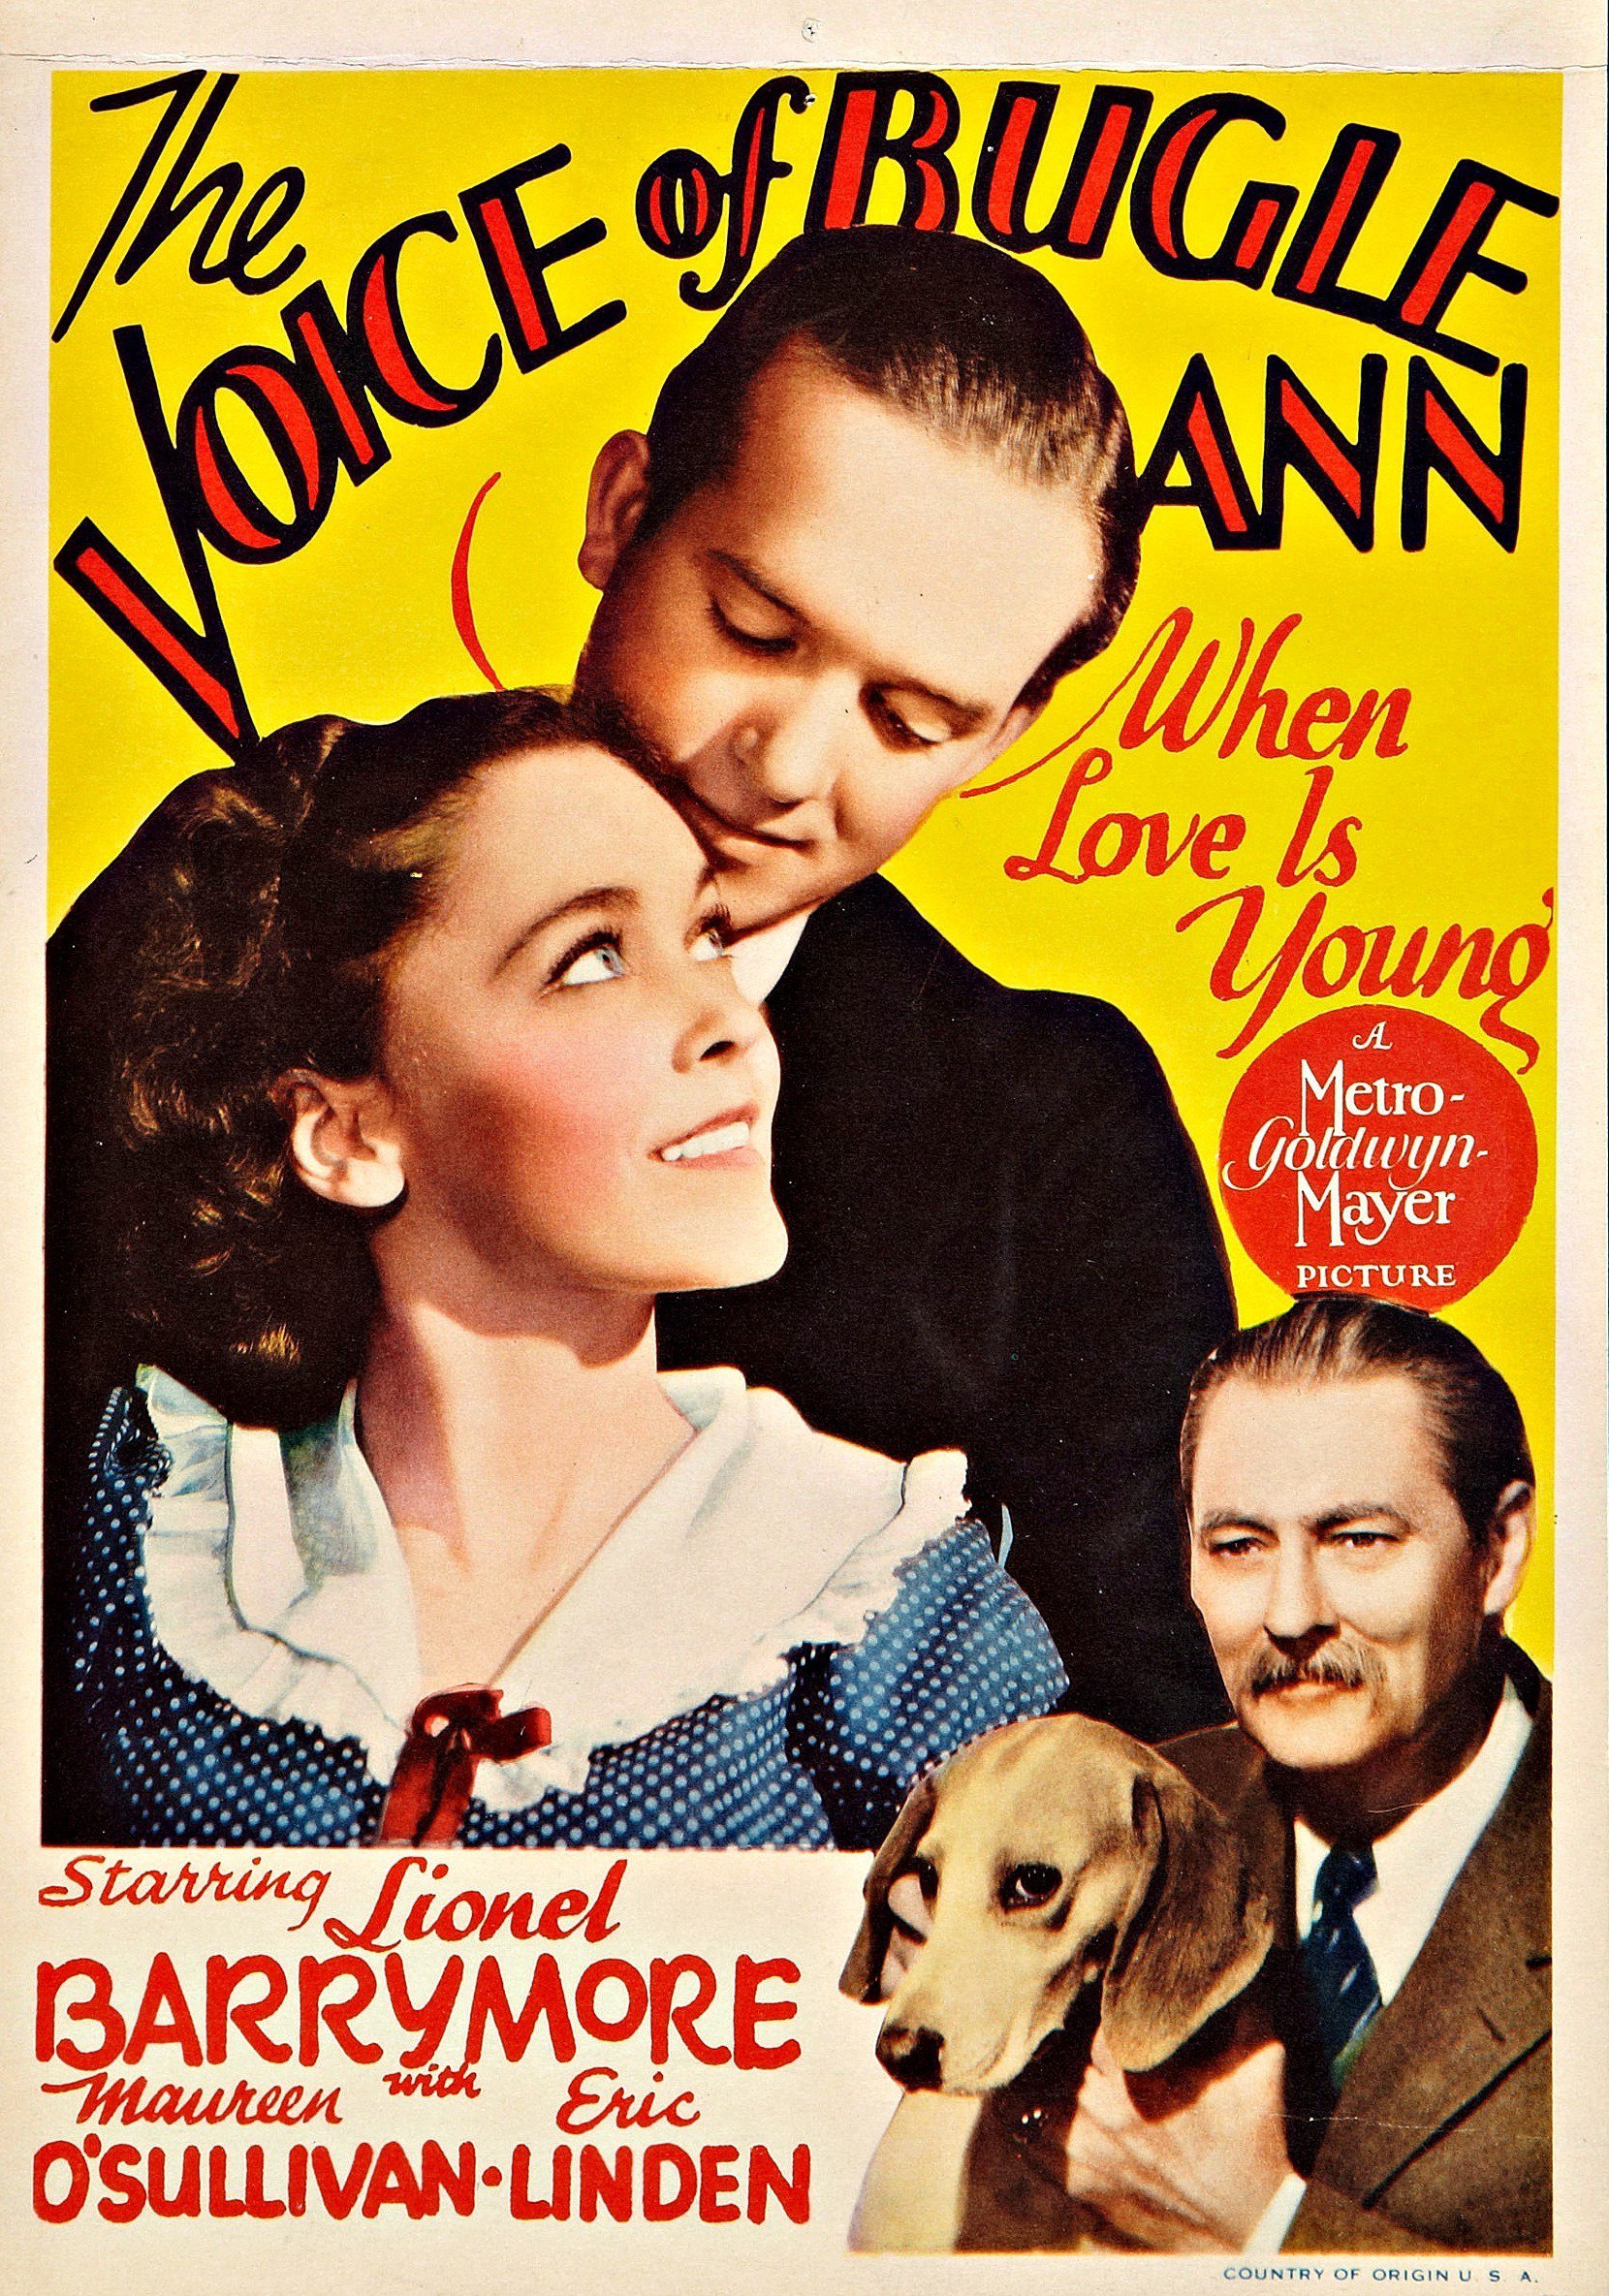 The Voice of Bugle Ann (1936) Screenshot 3